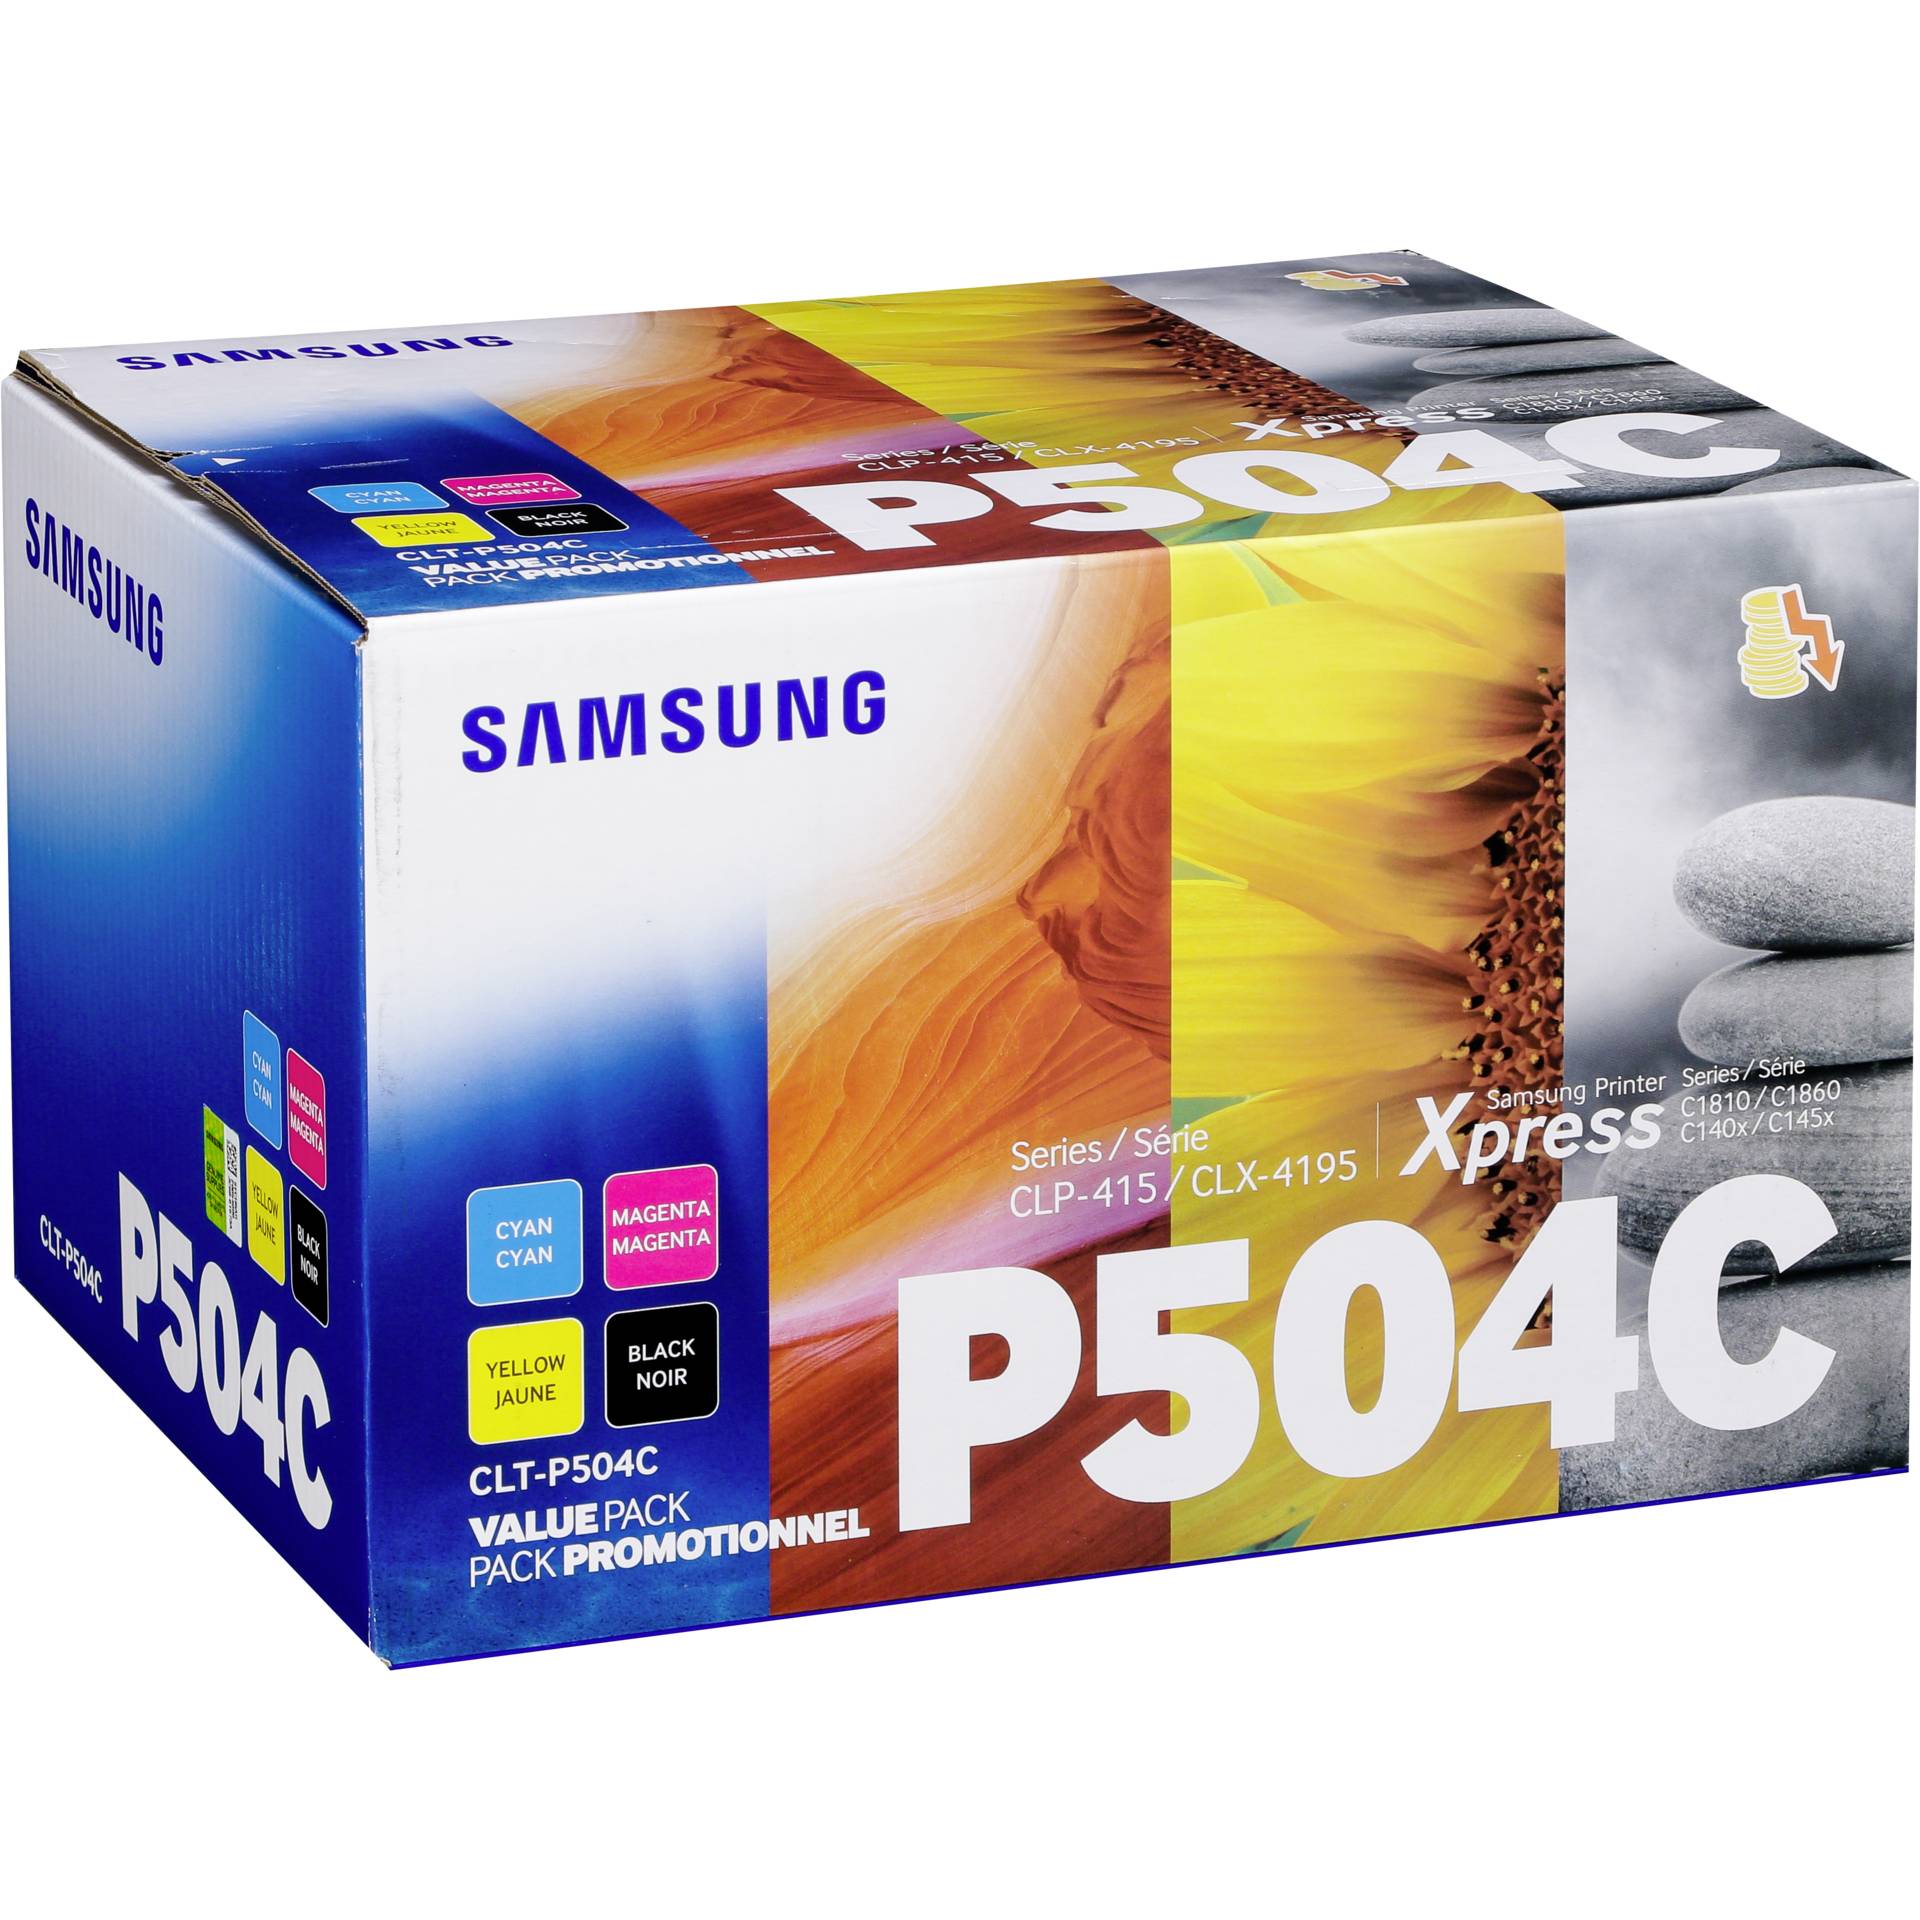 Samsung CLT-P 504 C Value Pack CYMK